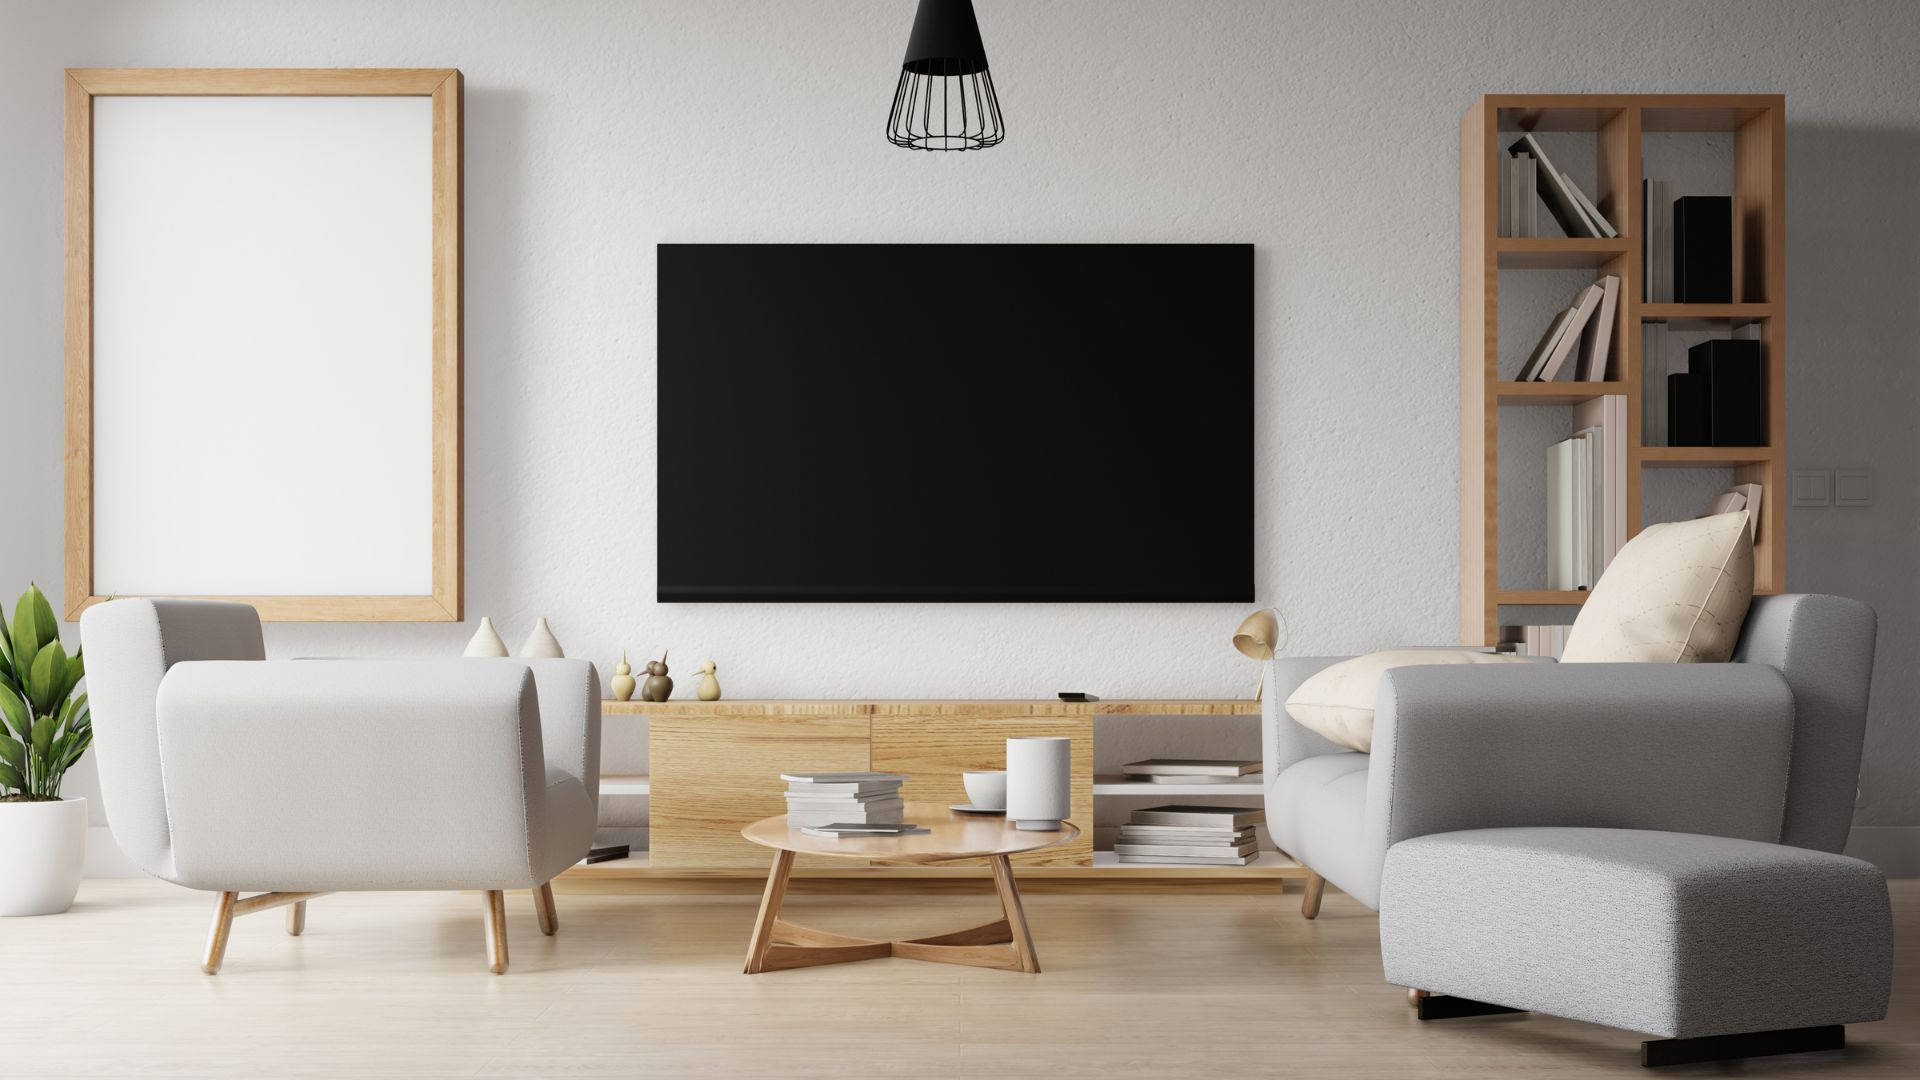 Sleek Minimalist Tv Cabinet Mounted On Wall